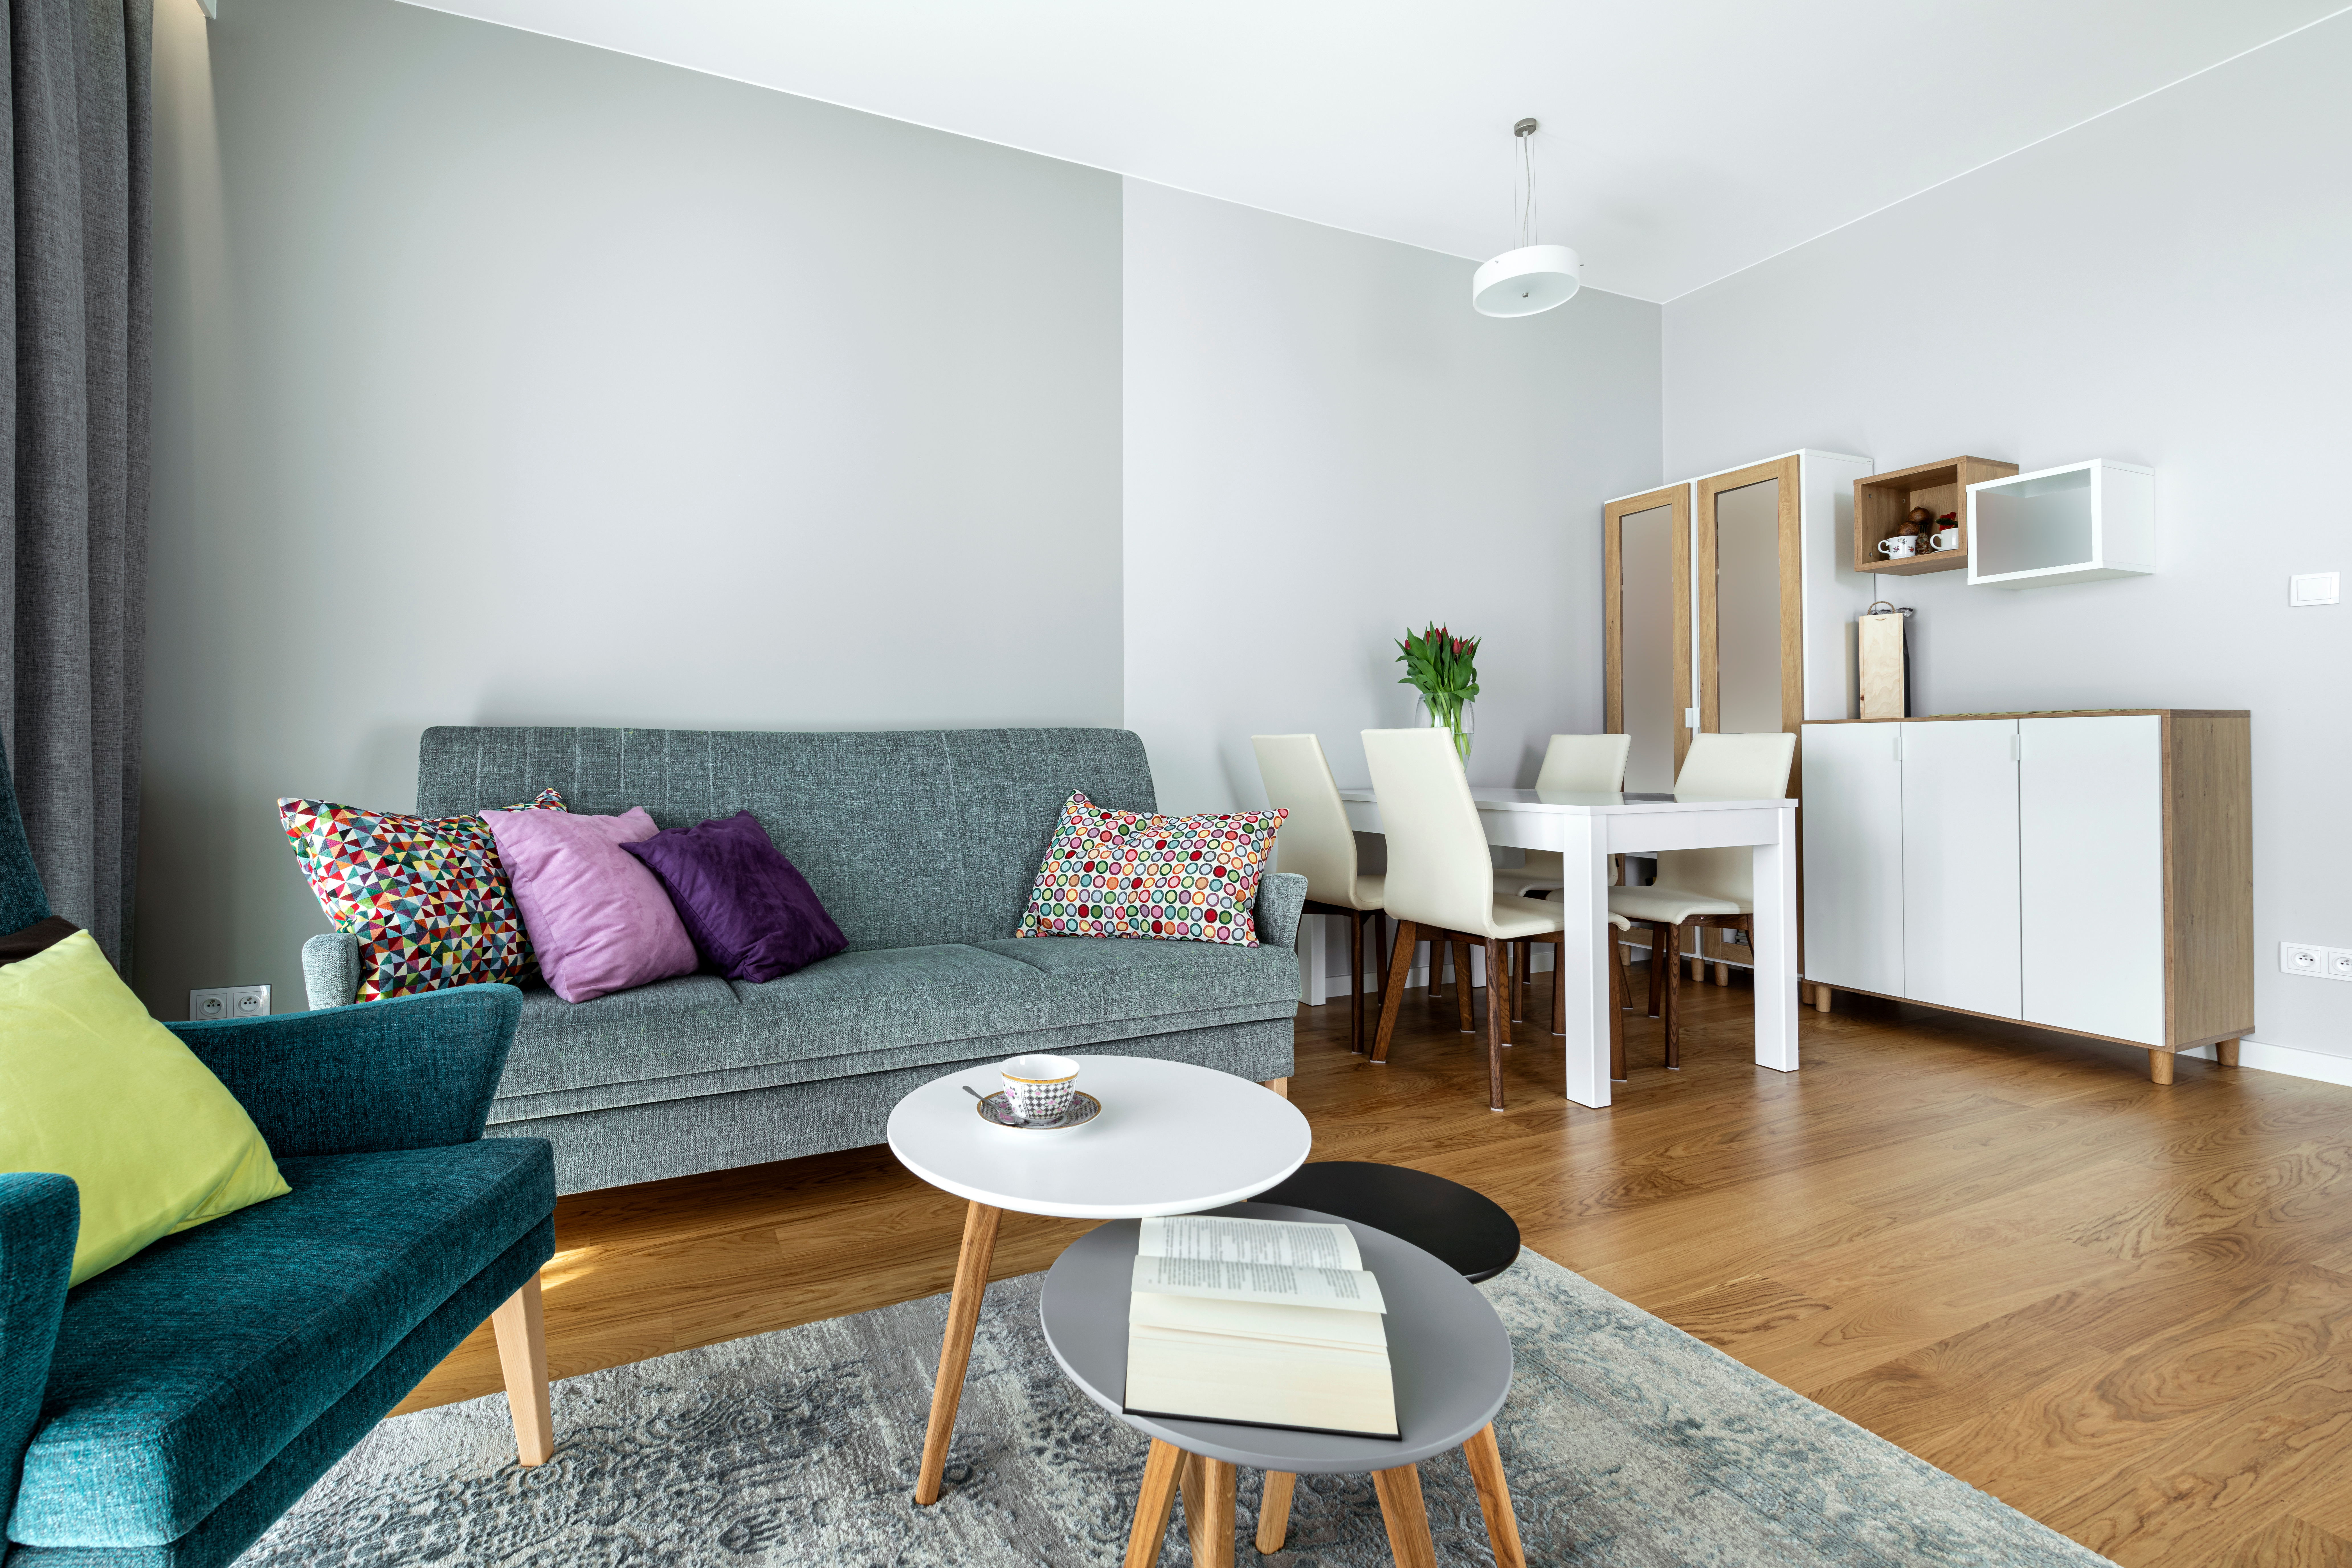 Modern interior design living room with wooden floor